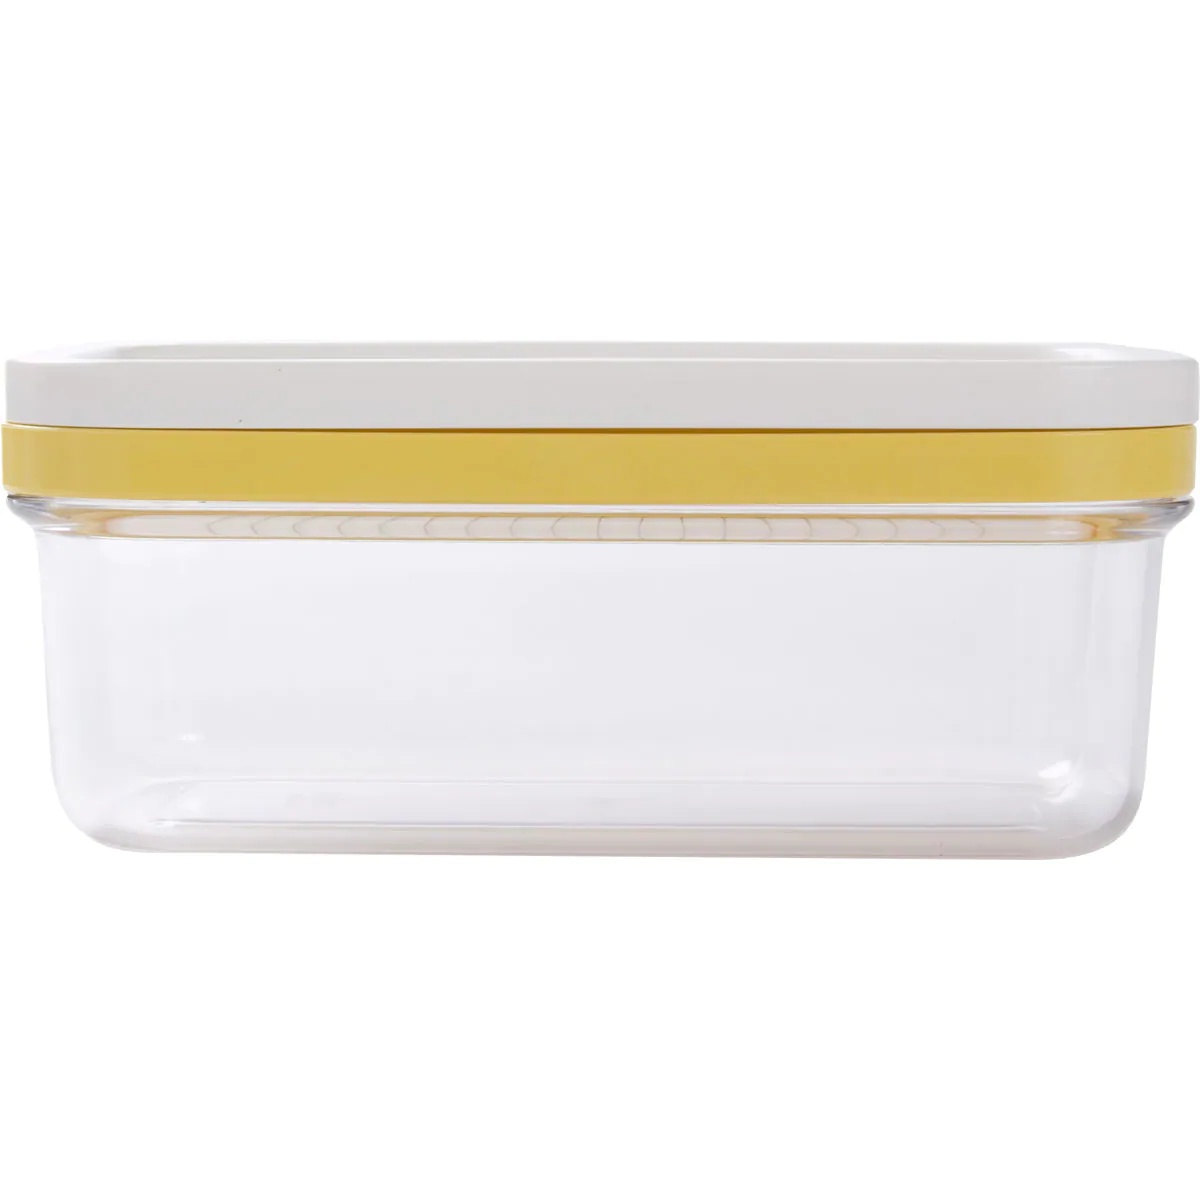 NITORI(ニトリ) バターケースの商品画像9 